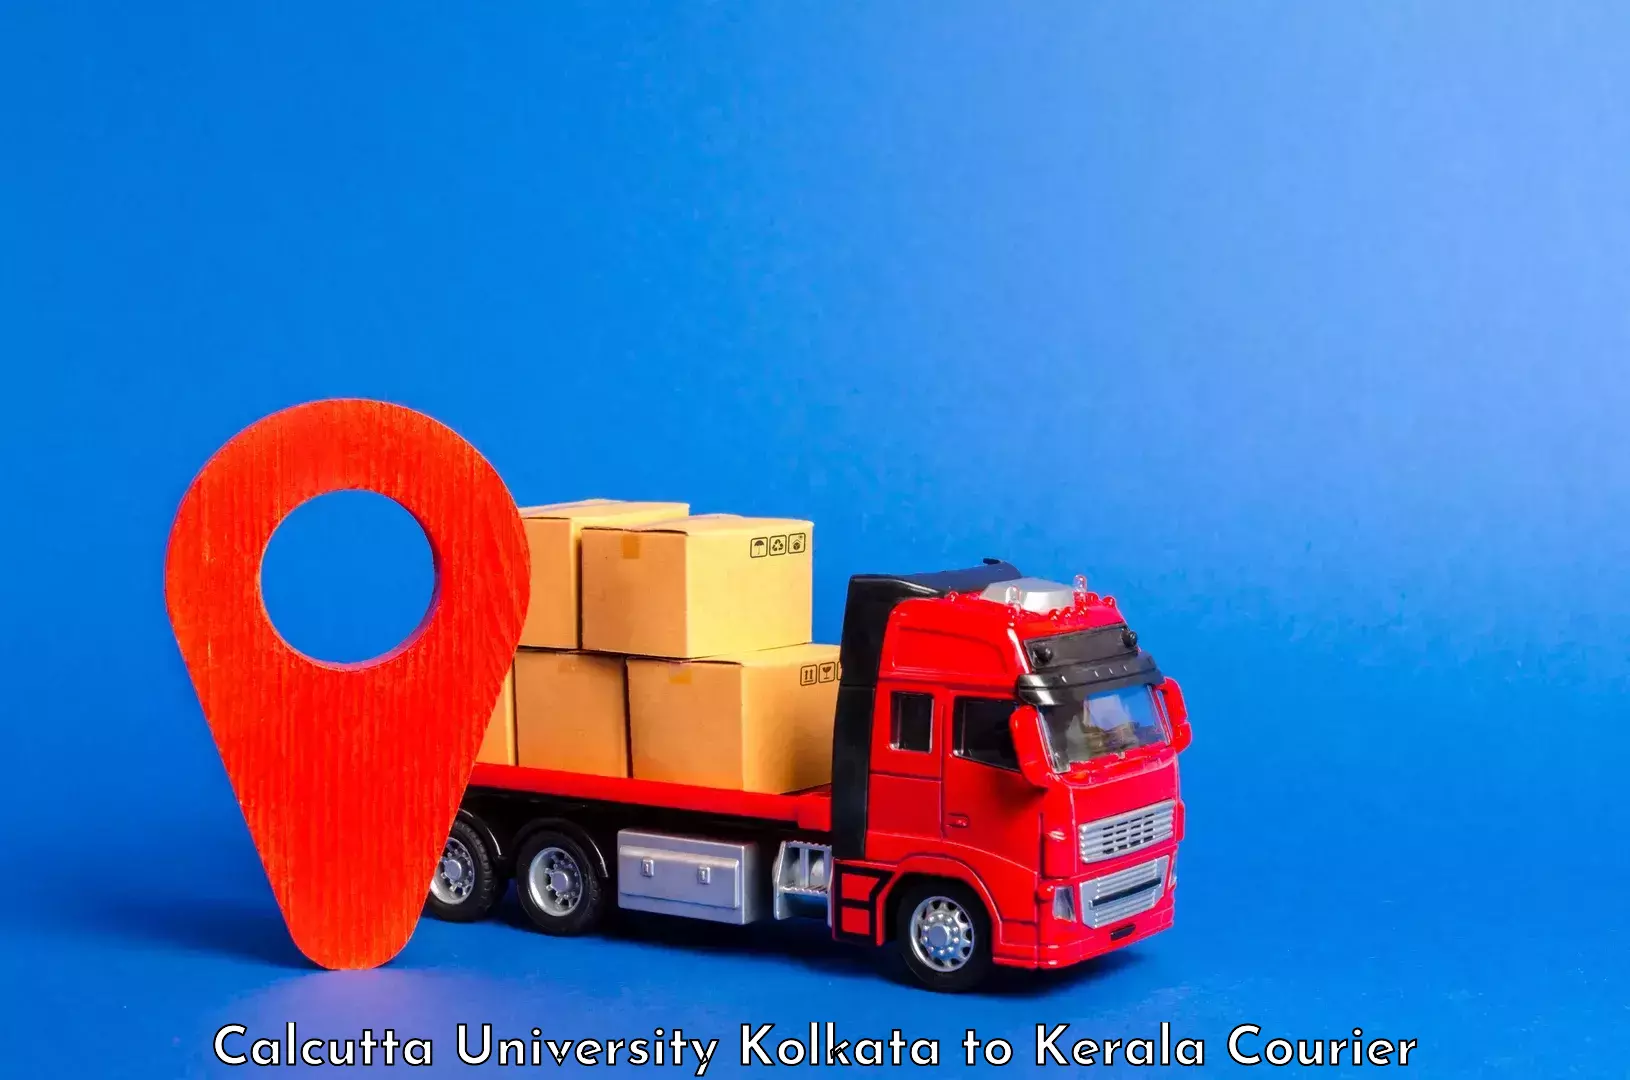 Baggage shipping service Calcutta University Kolkata to Kerala